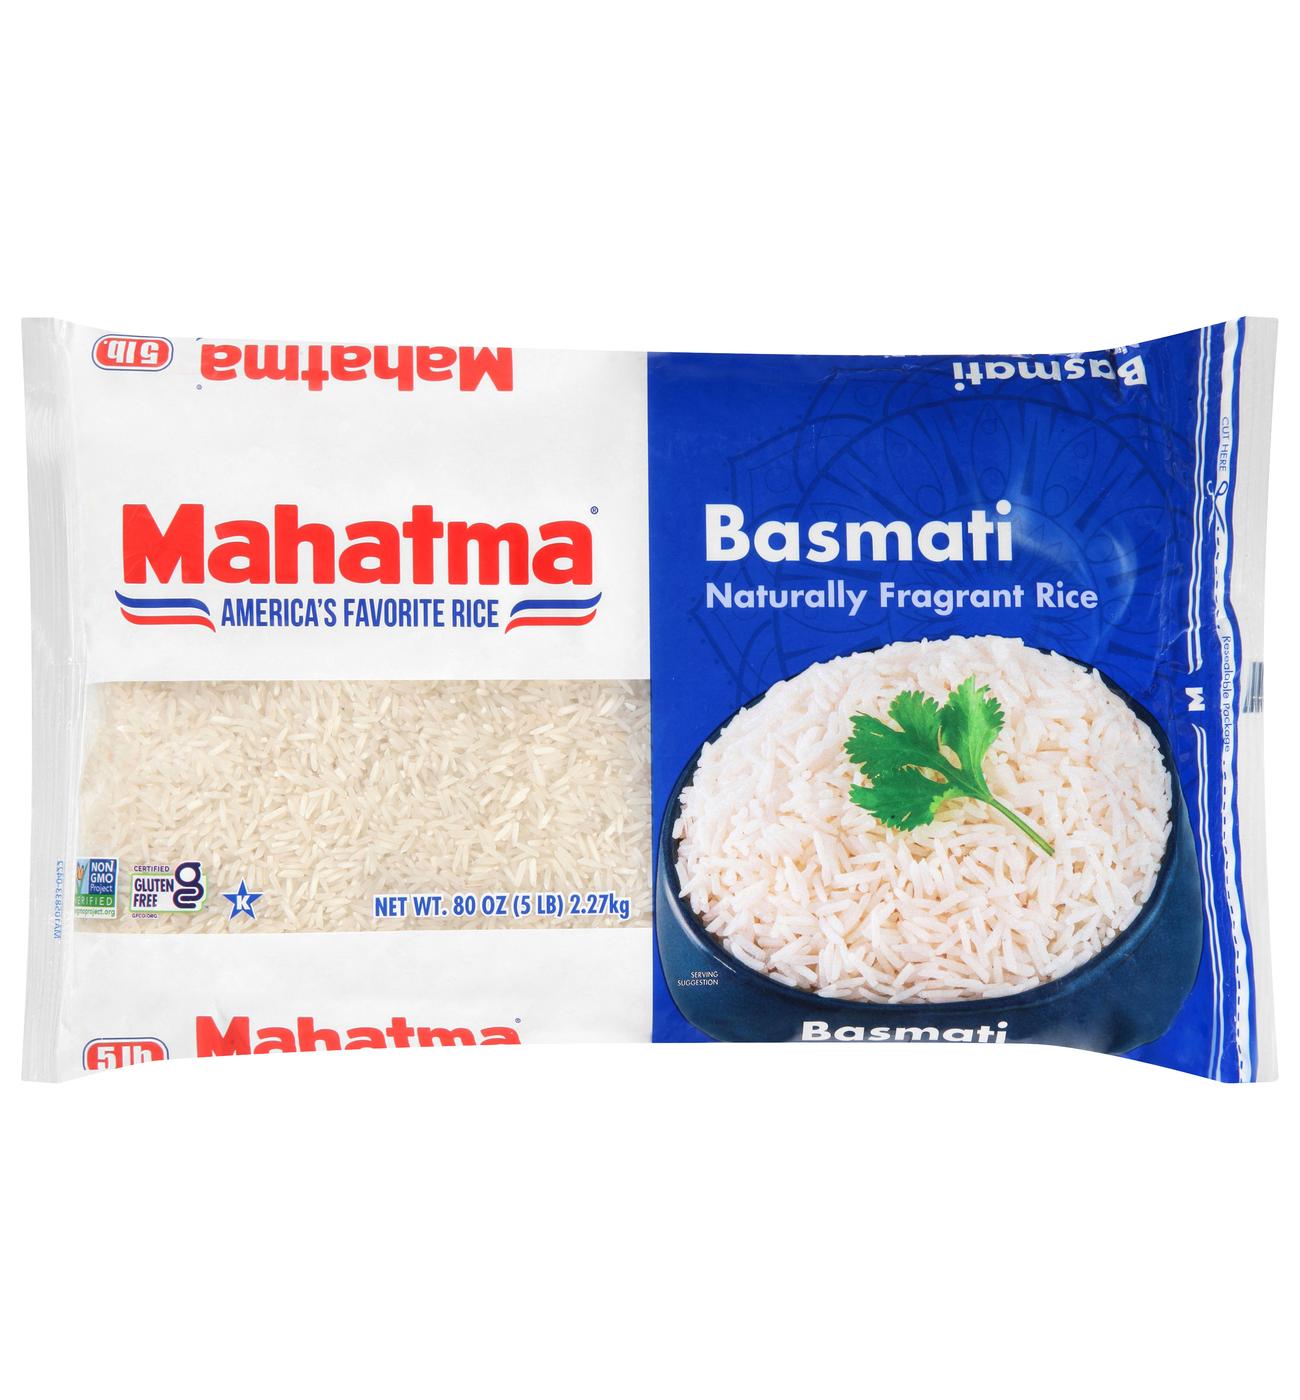 Mahatma Basmati Rice; image 1 of 5